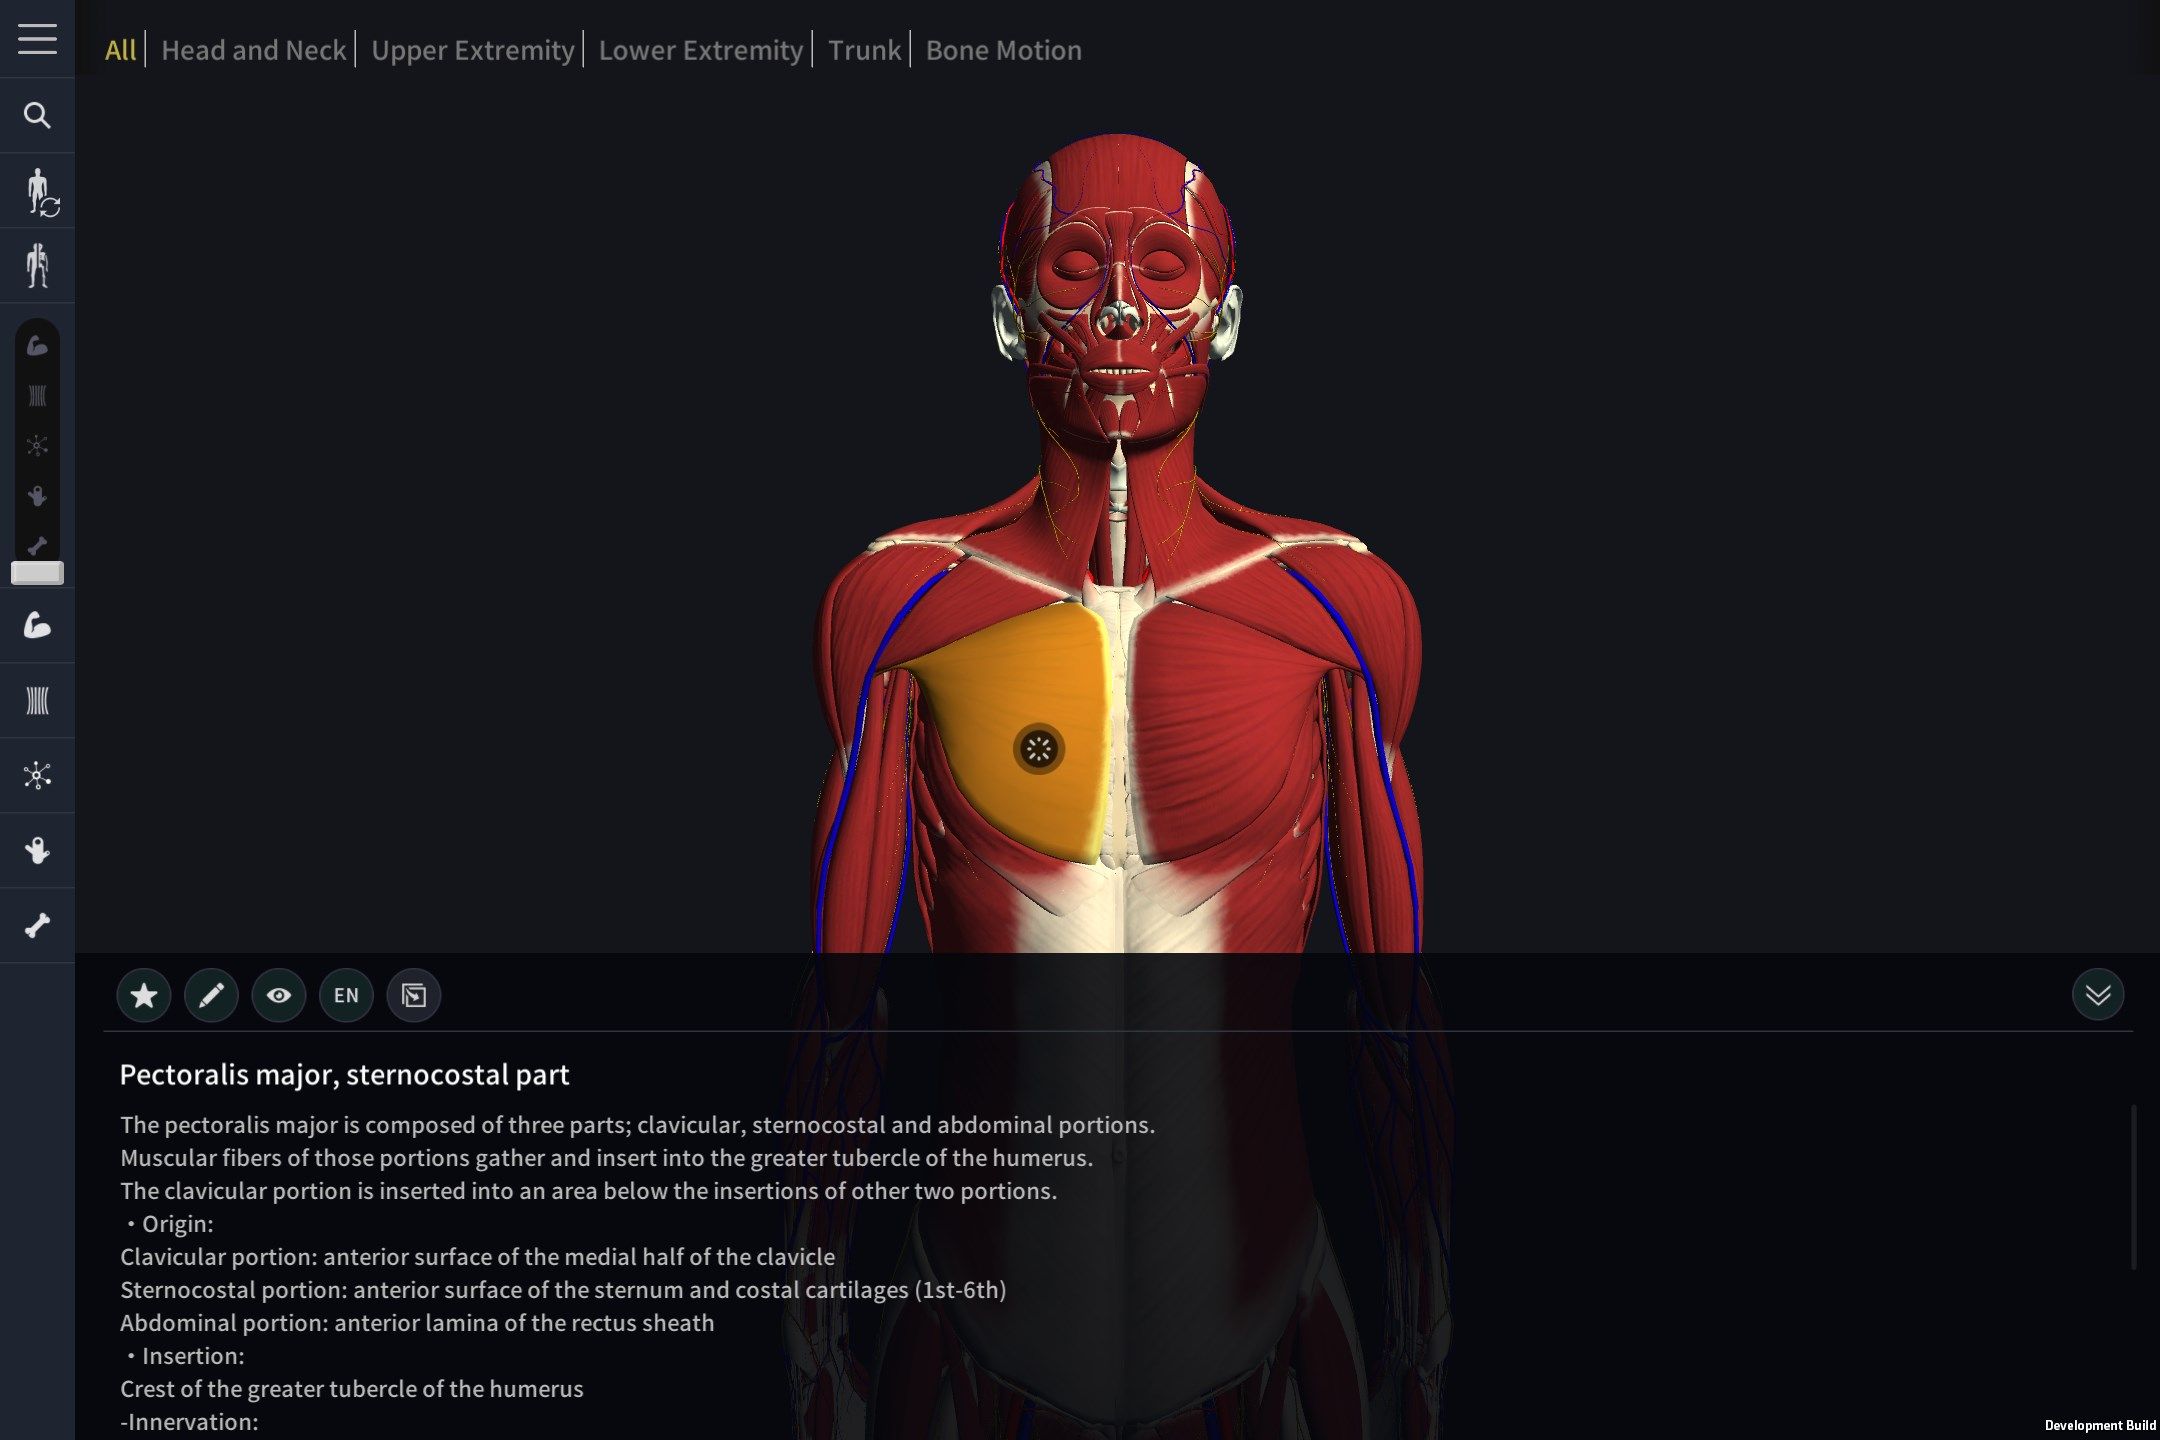 teamLabBody -3D Motion Human Anatomy-